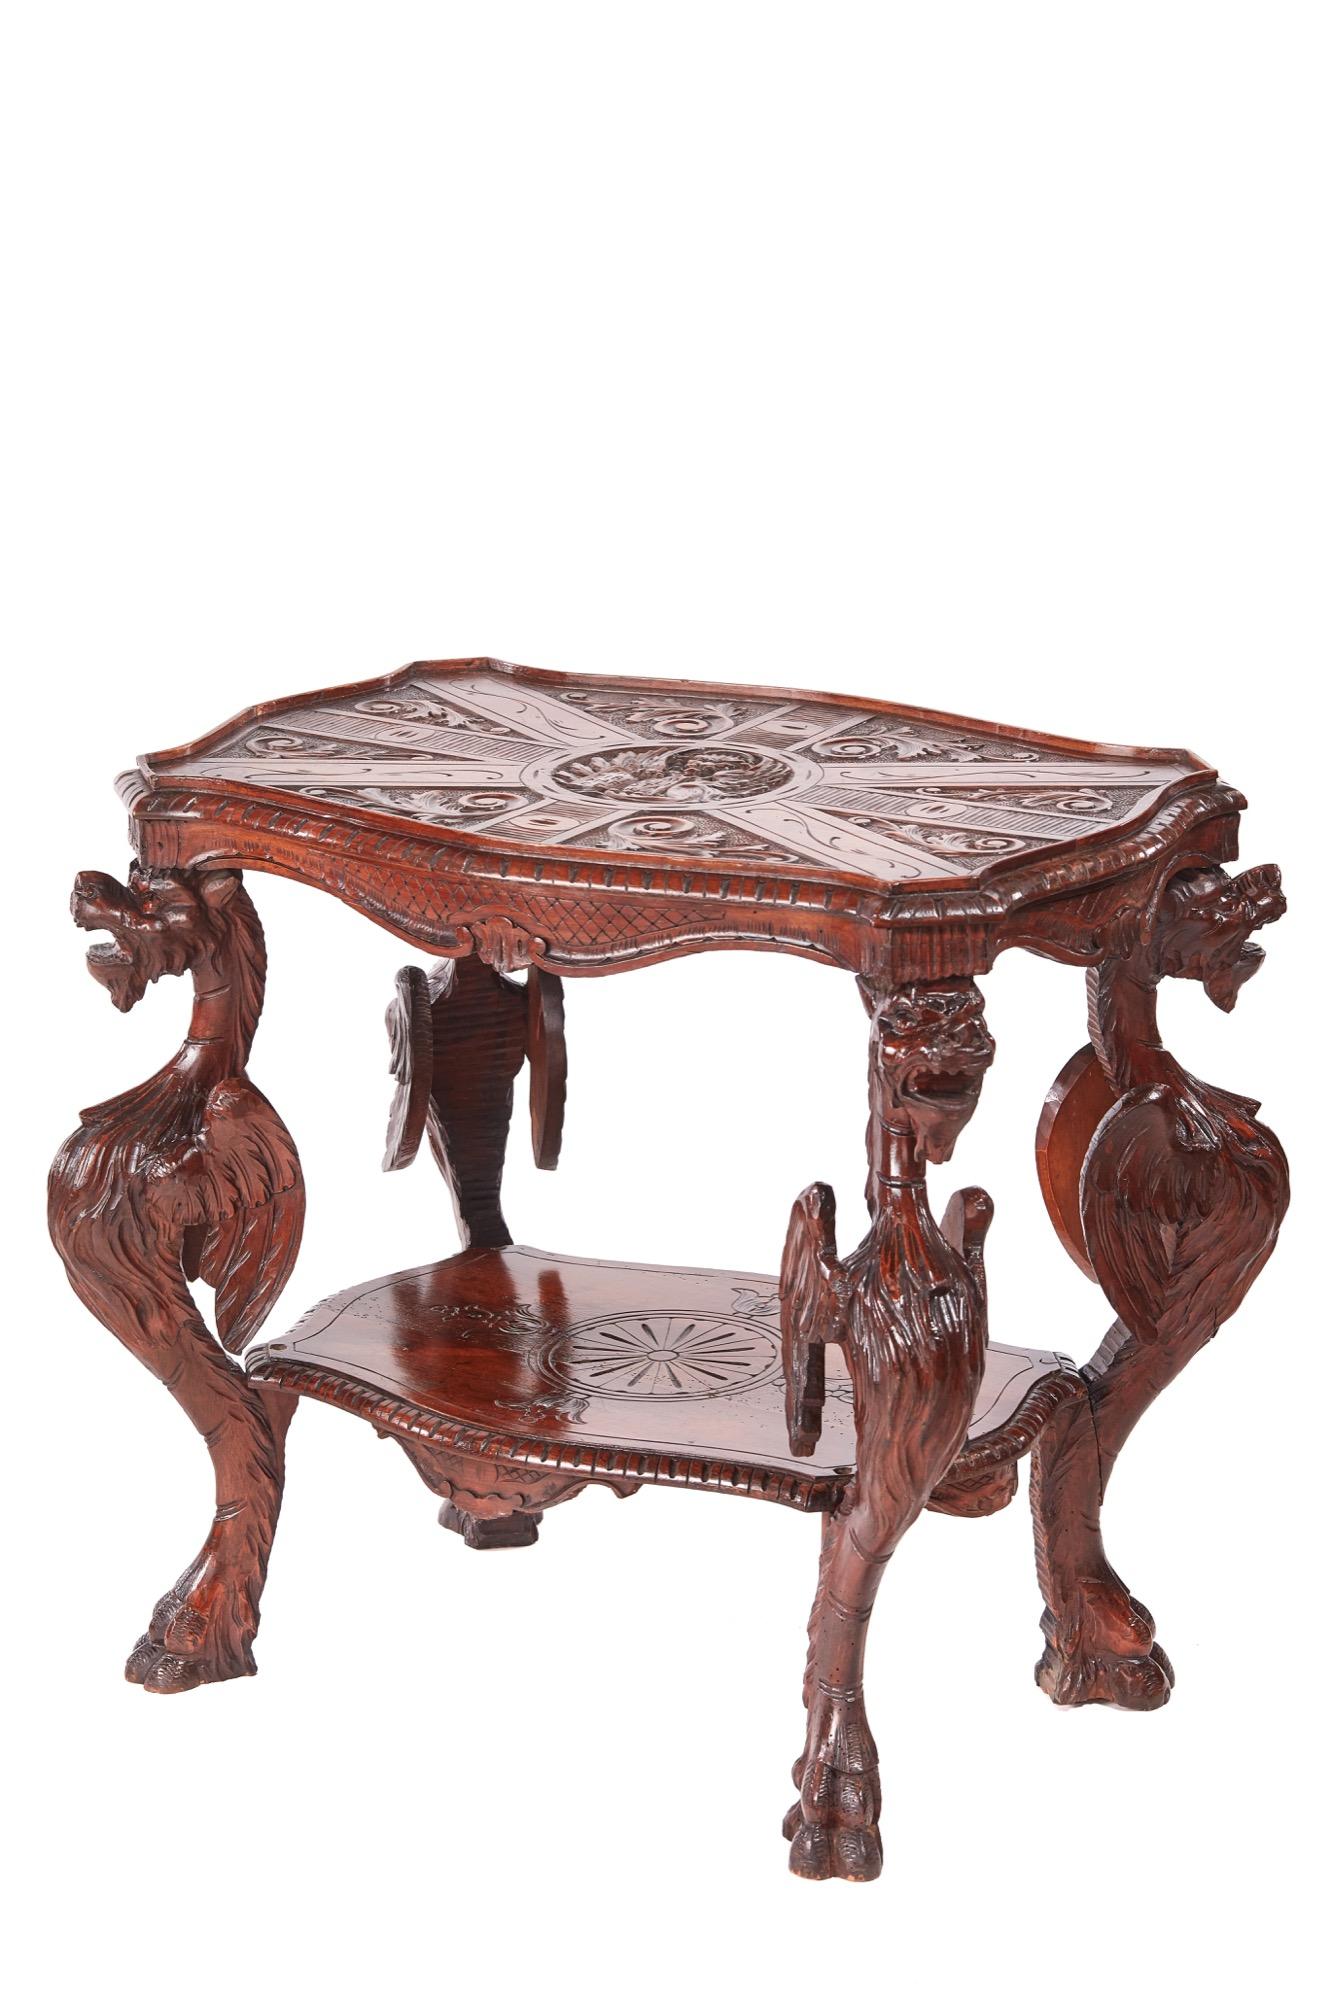 antique center table